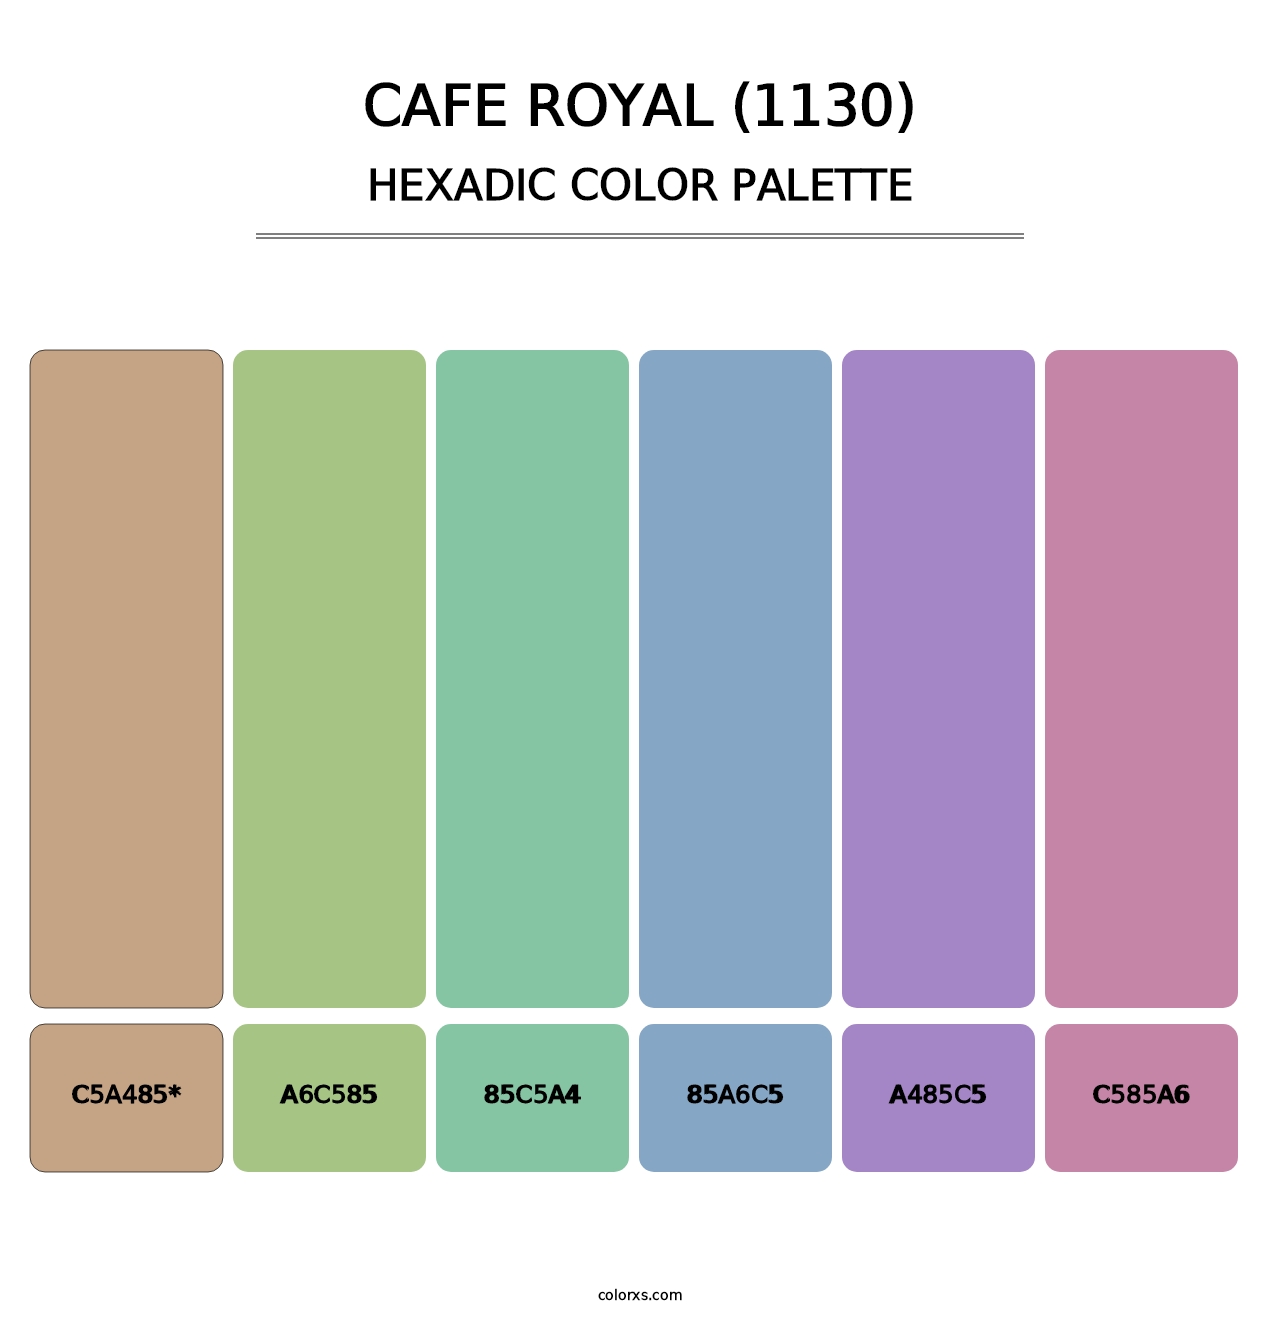 Cafe Royal (1130) - Hexadic Color Palette